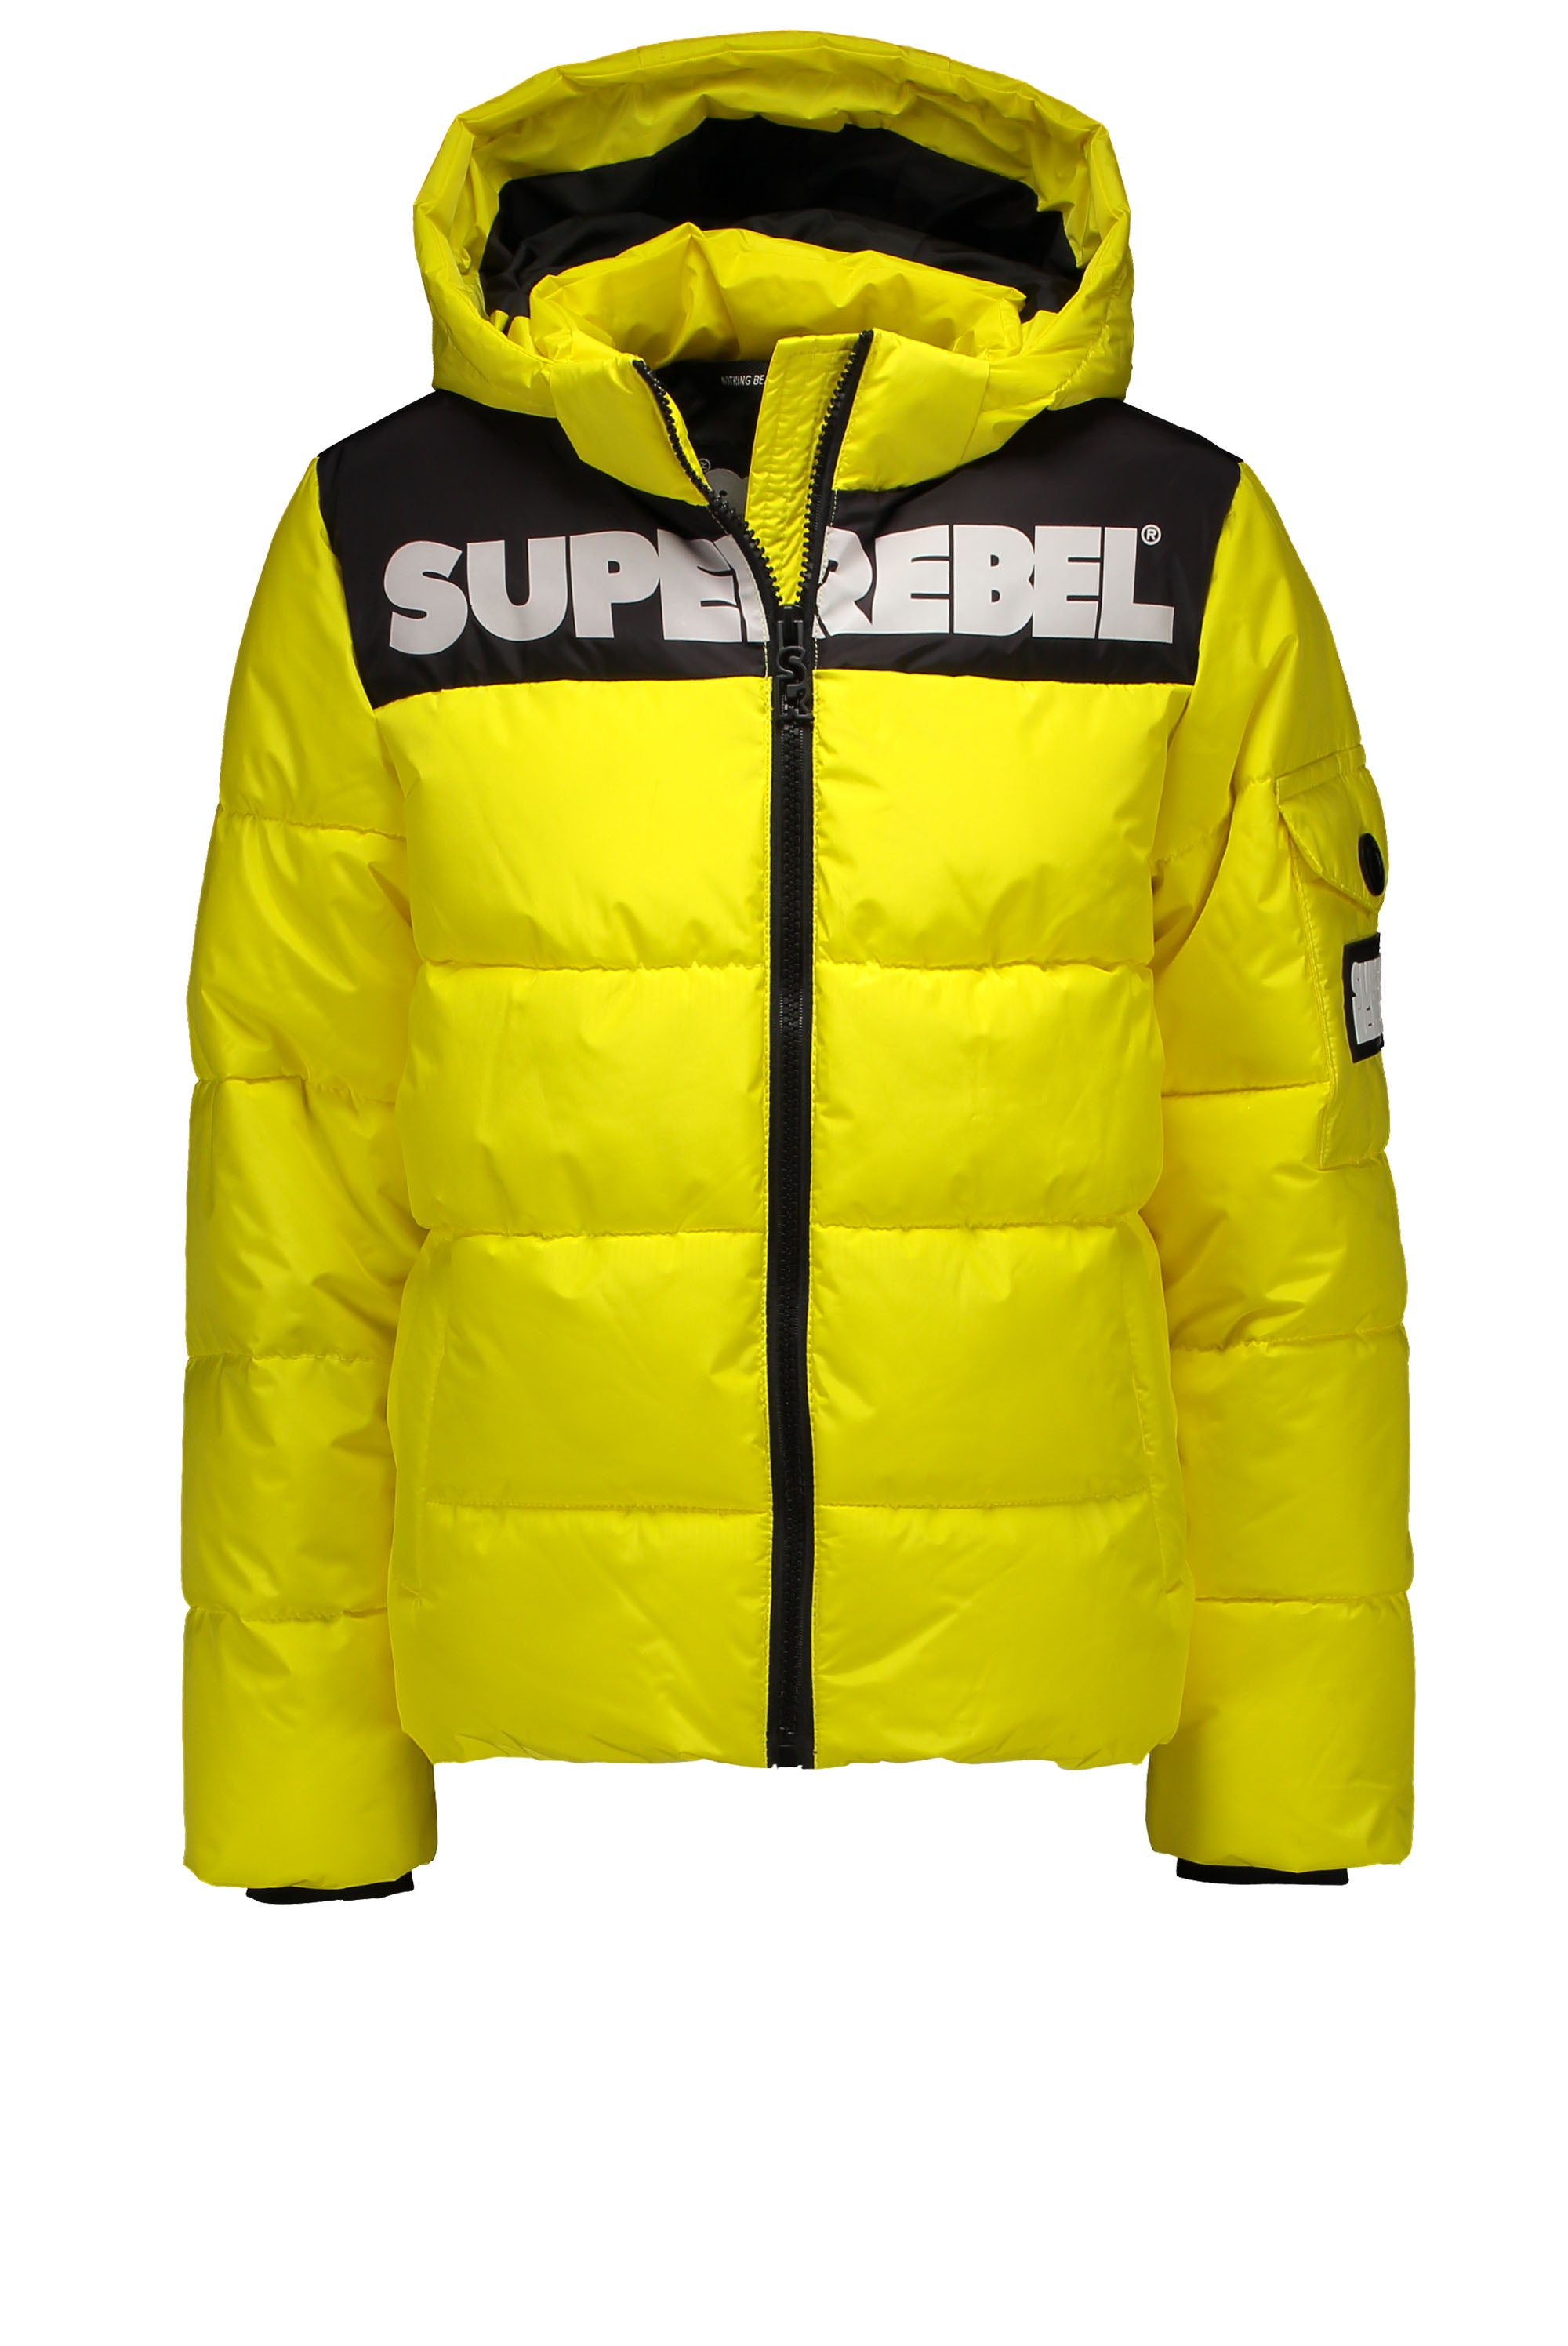 Super Rebel Winterjacket STUNG Yellow